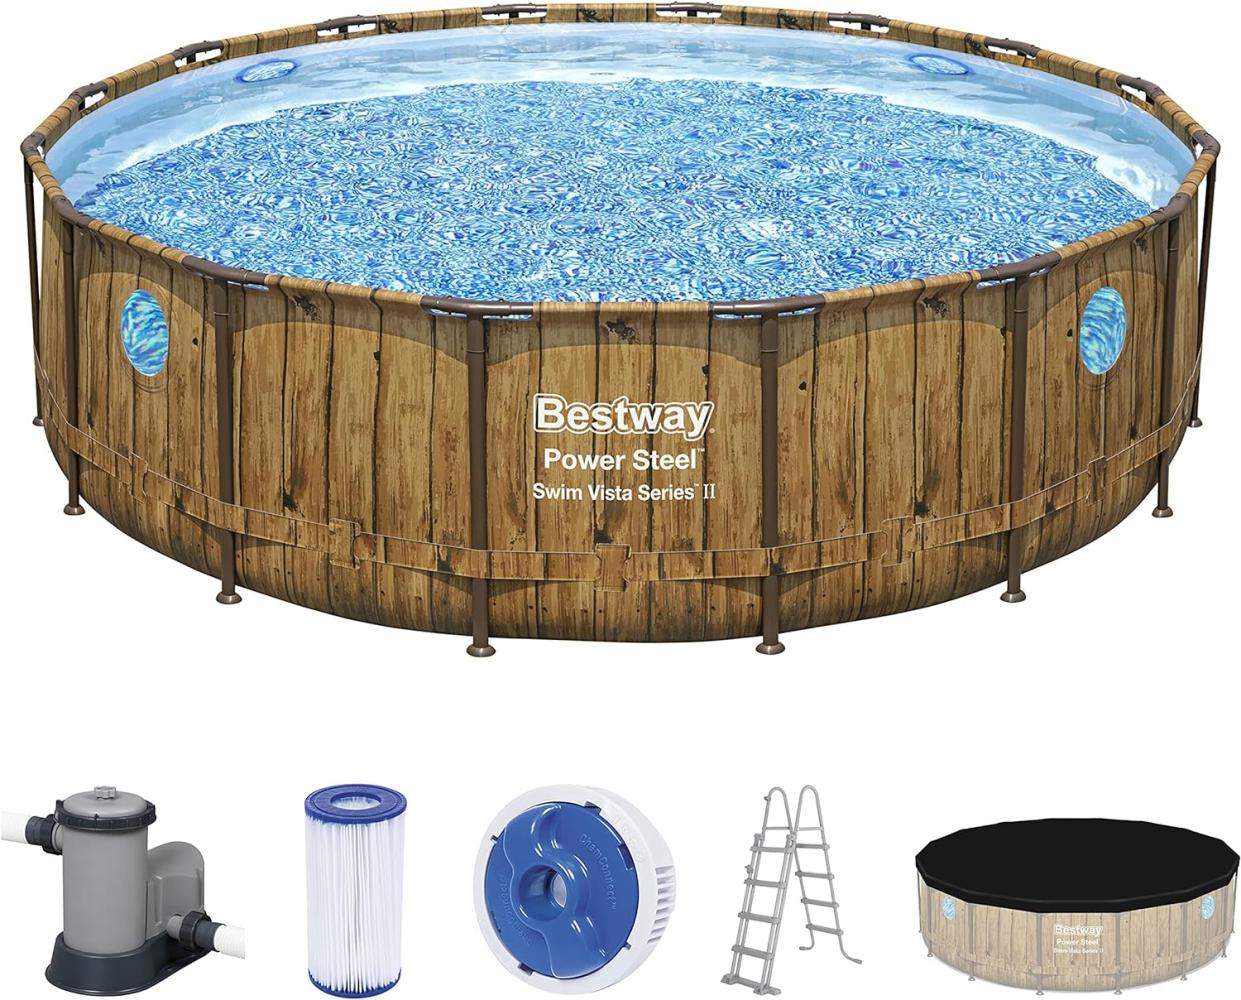 Power Steel™ Swim Vista Series™ Frame Pool Komplett-Set mit Filterpumpe Ø 488 x 122 cm, Holz-Optik (Pinie), rund Bild 1